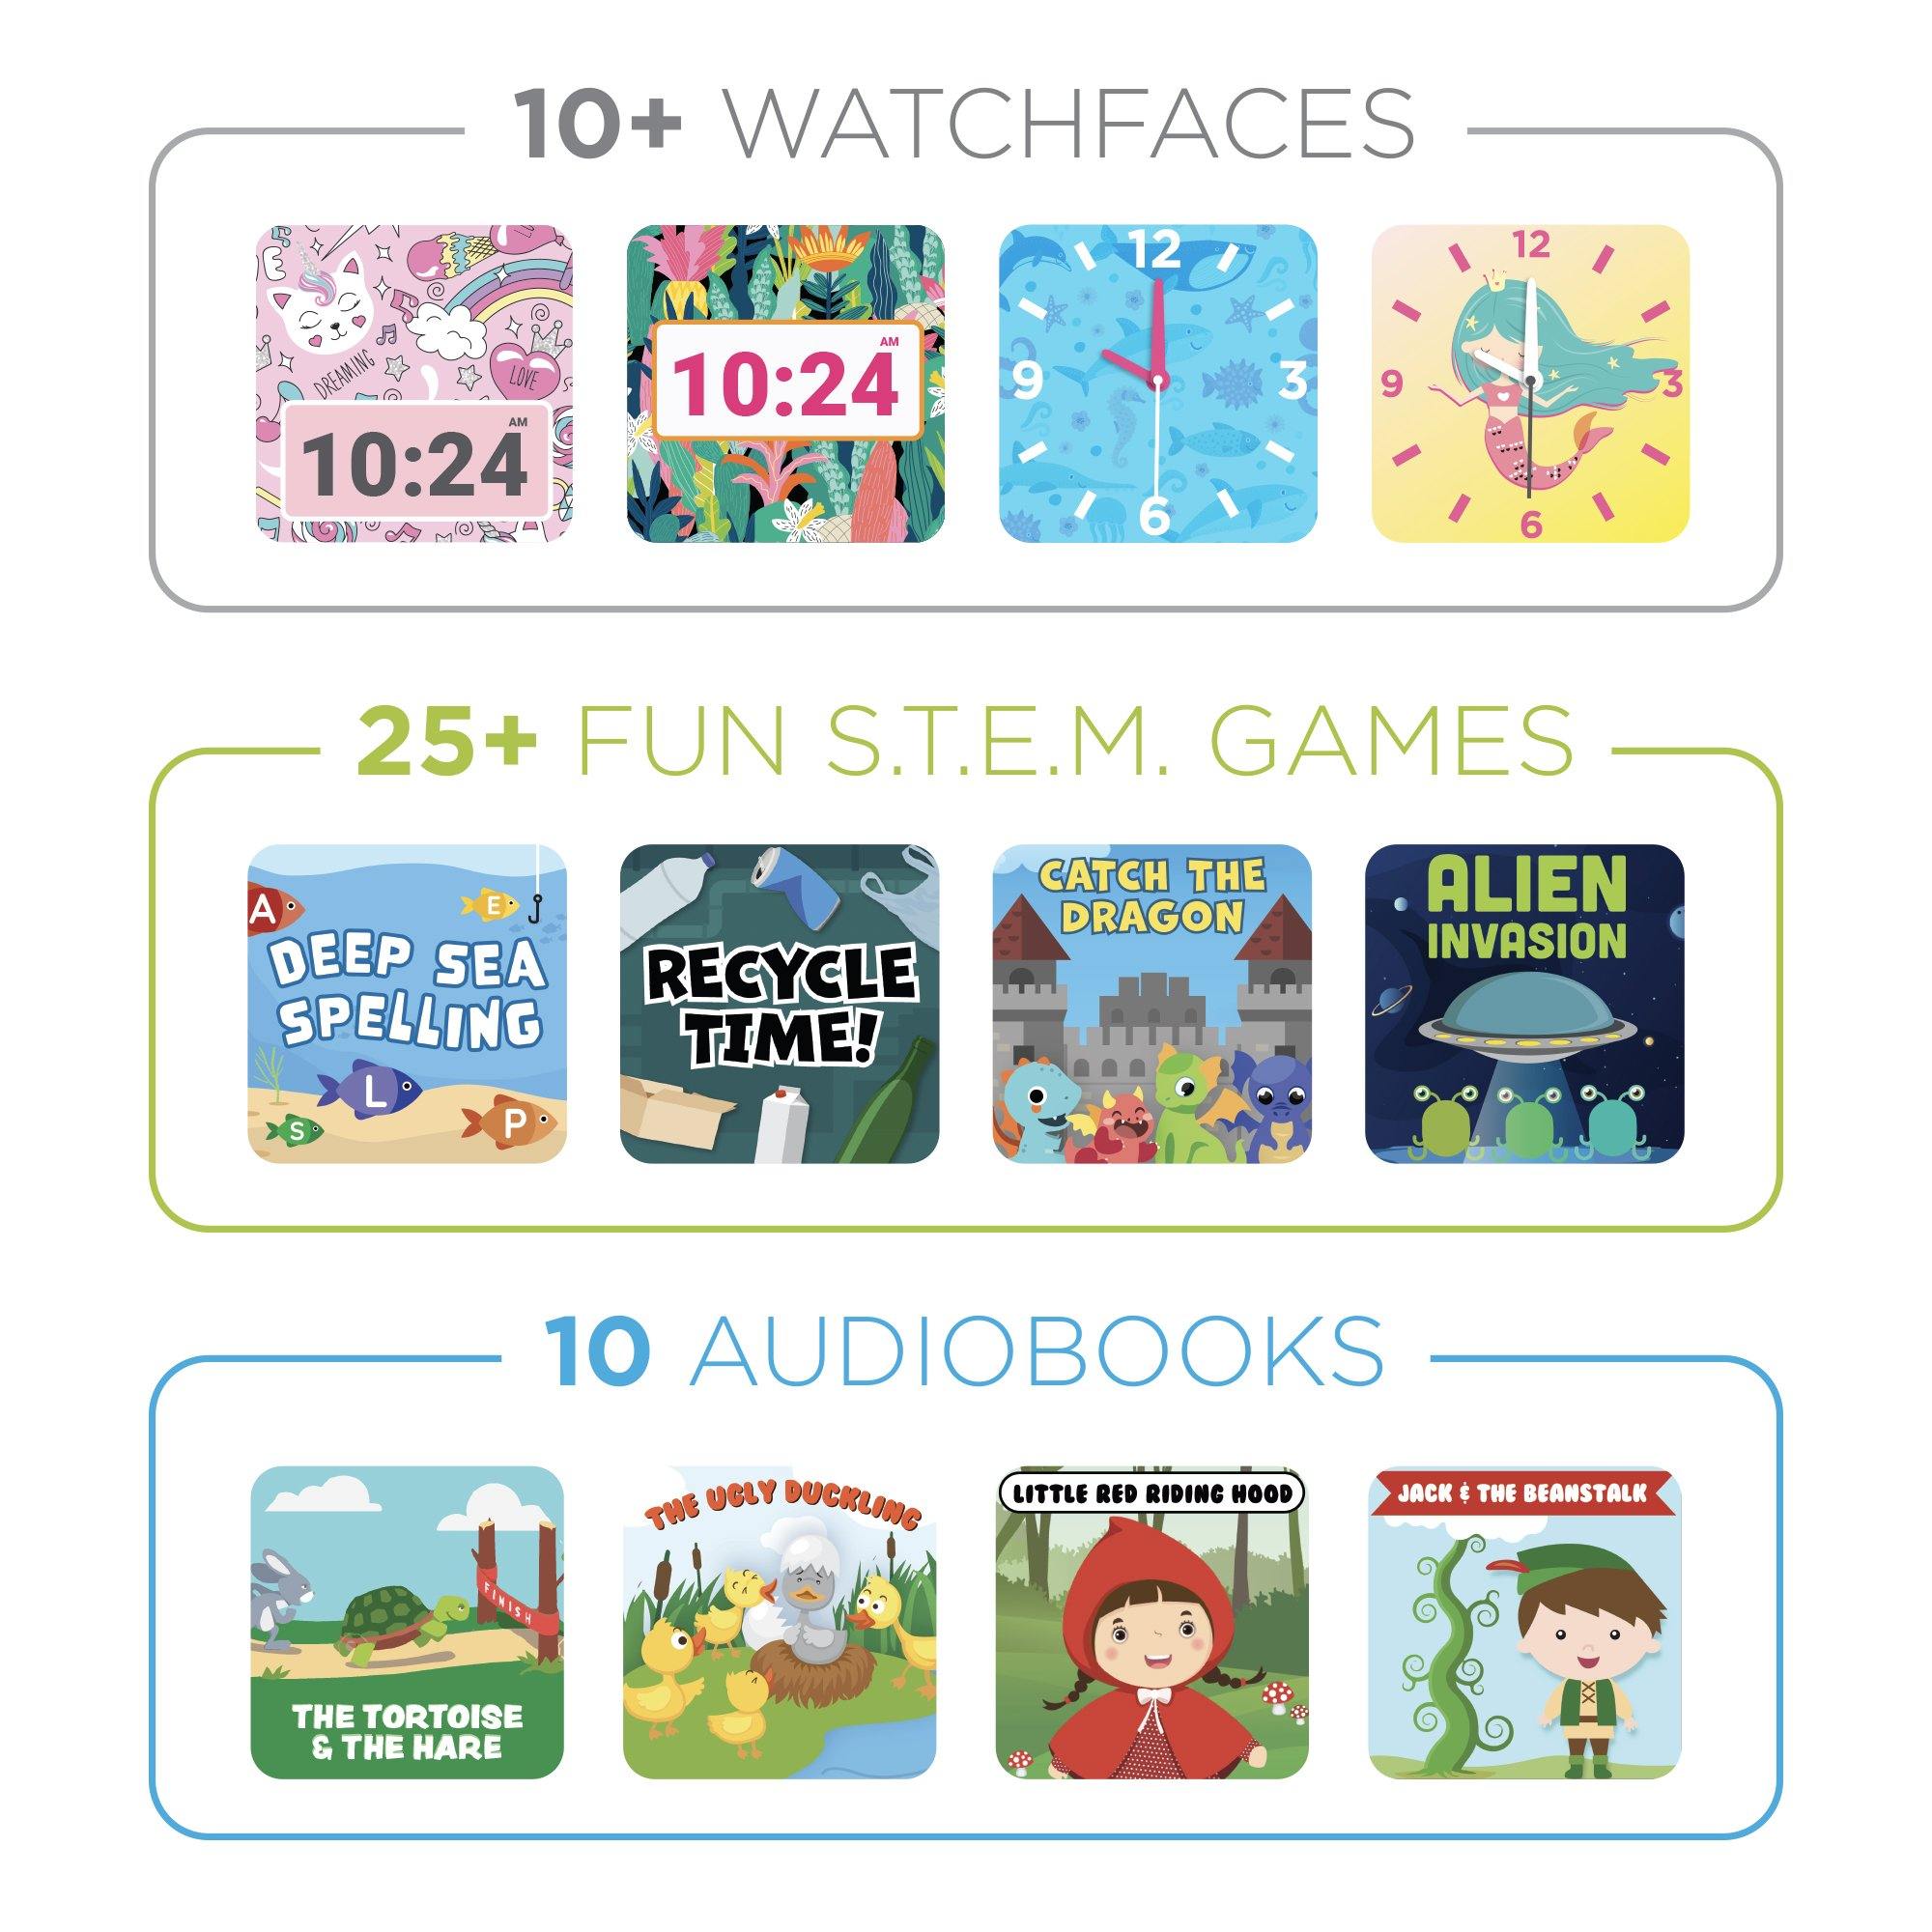 PlayZoom 2 Kids Smartwatch: Rainbow Print affordable smart watch